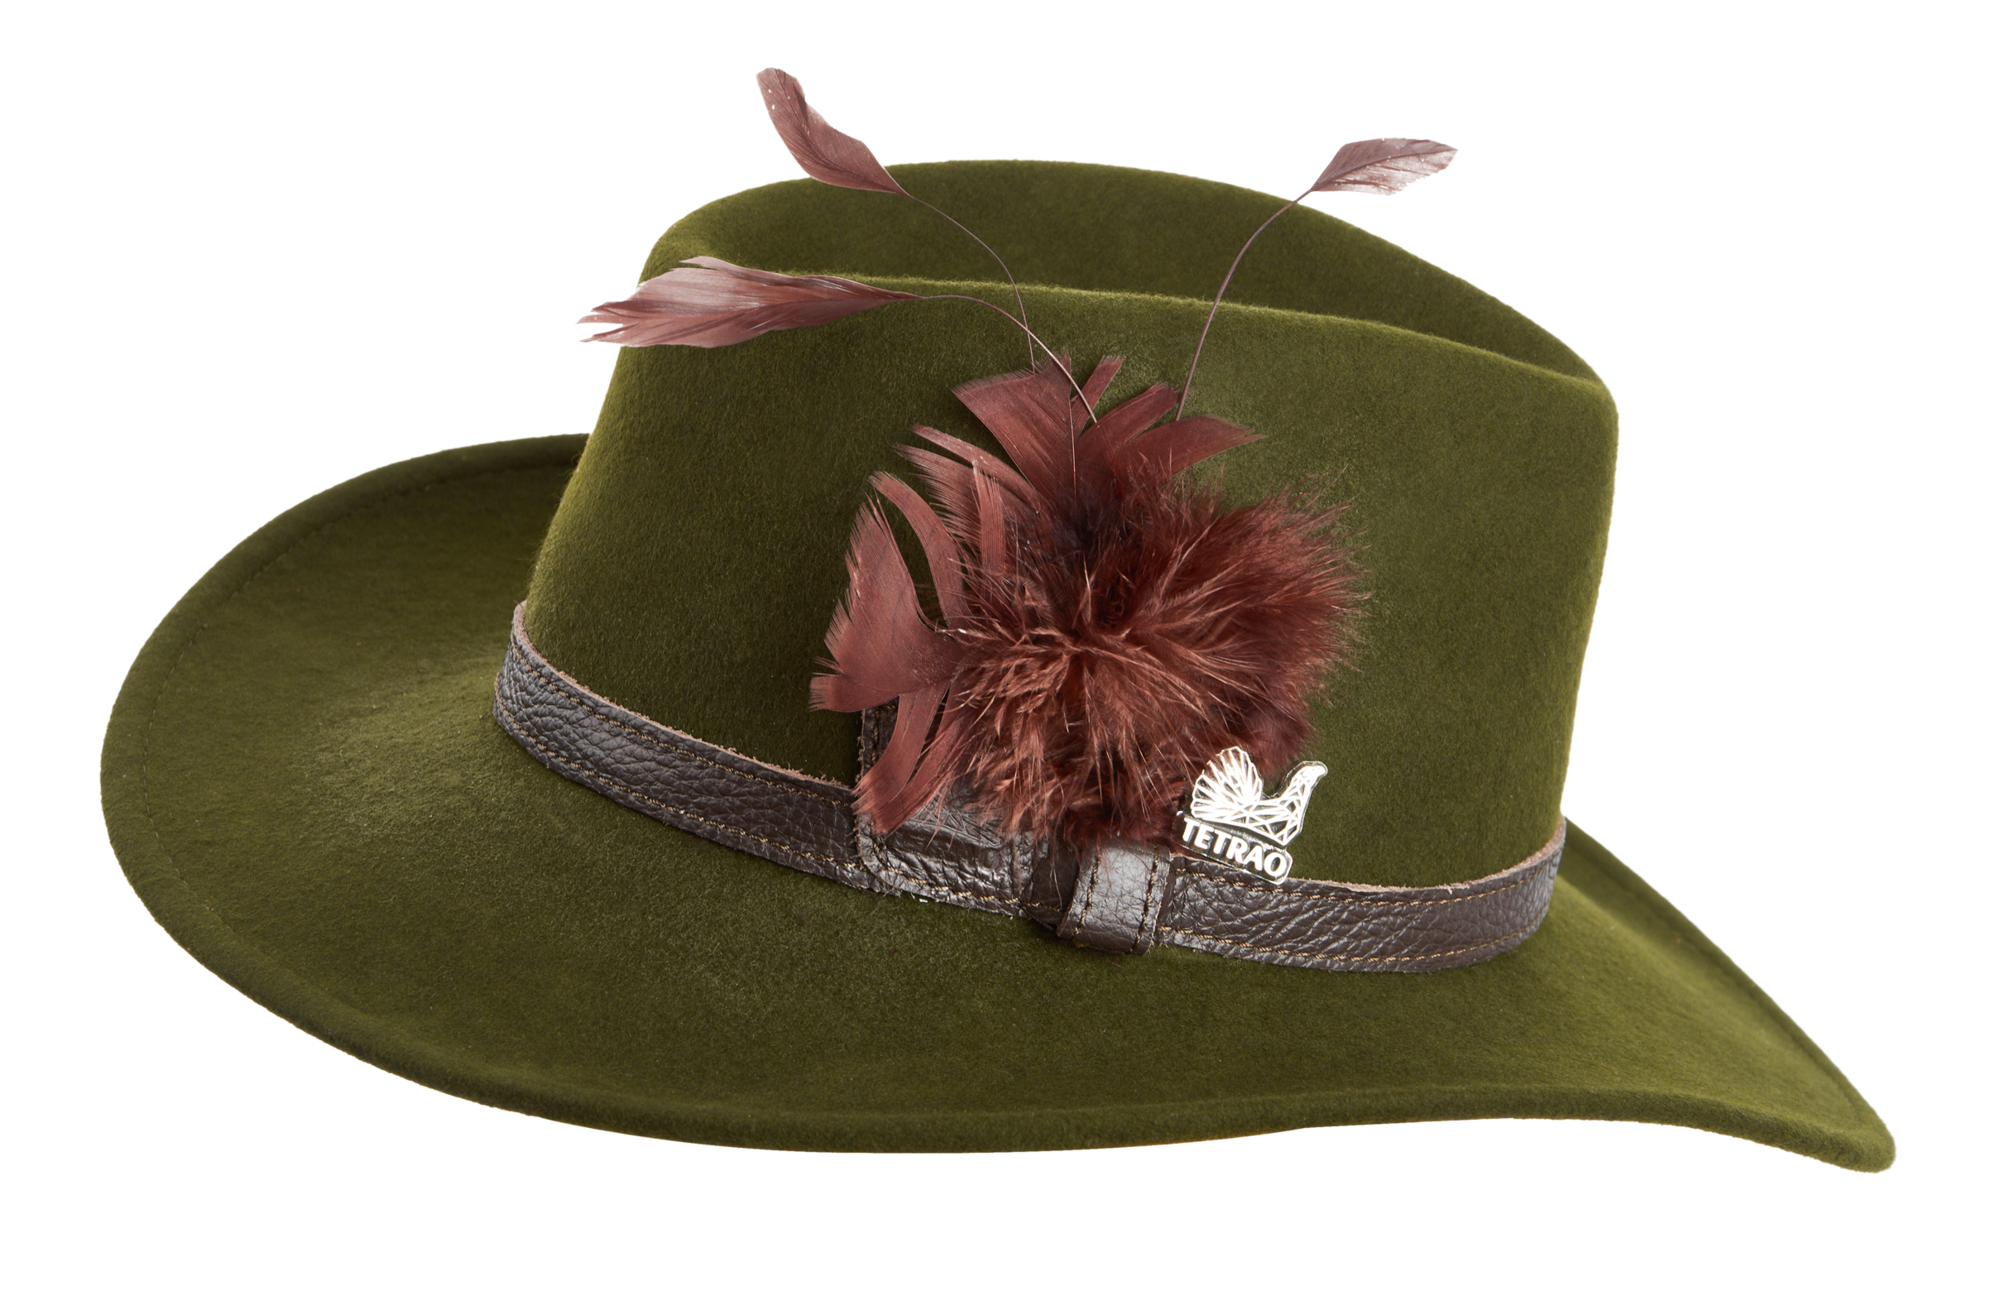 Dámsky poľovnícky klobúk TETRAO - s hnedým remienkom zelený 58  